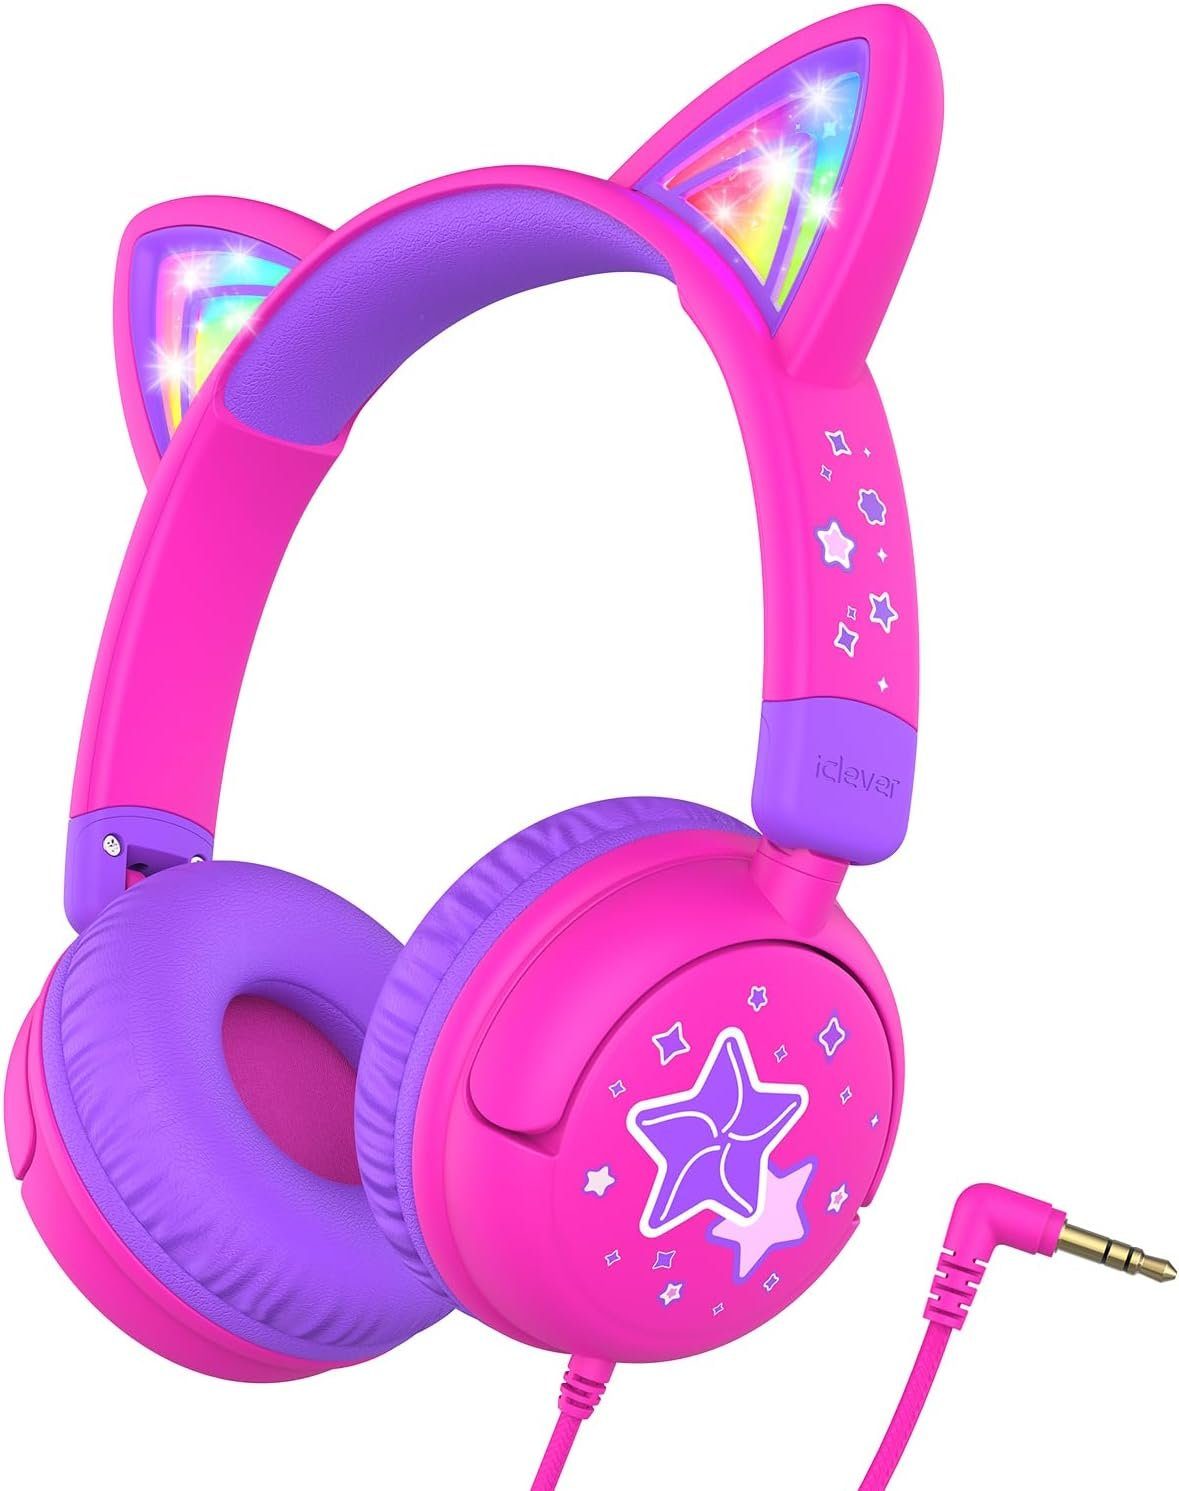 Rosa Stereo On-Ear-Kopfhörer (85dBA Lautstärke, iclever Sound, IC-HS25 Heißes Sichere Kopfhörer) Kleinkind